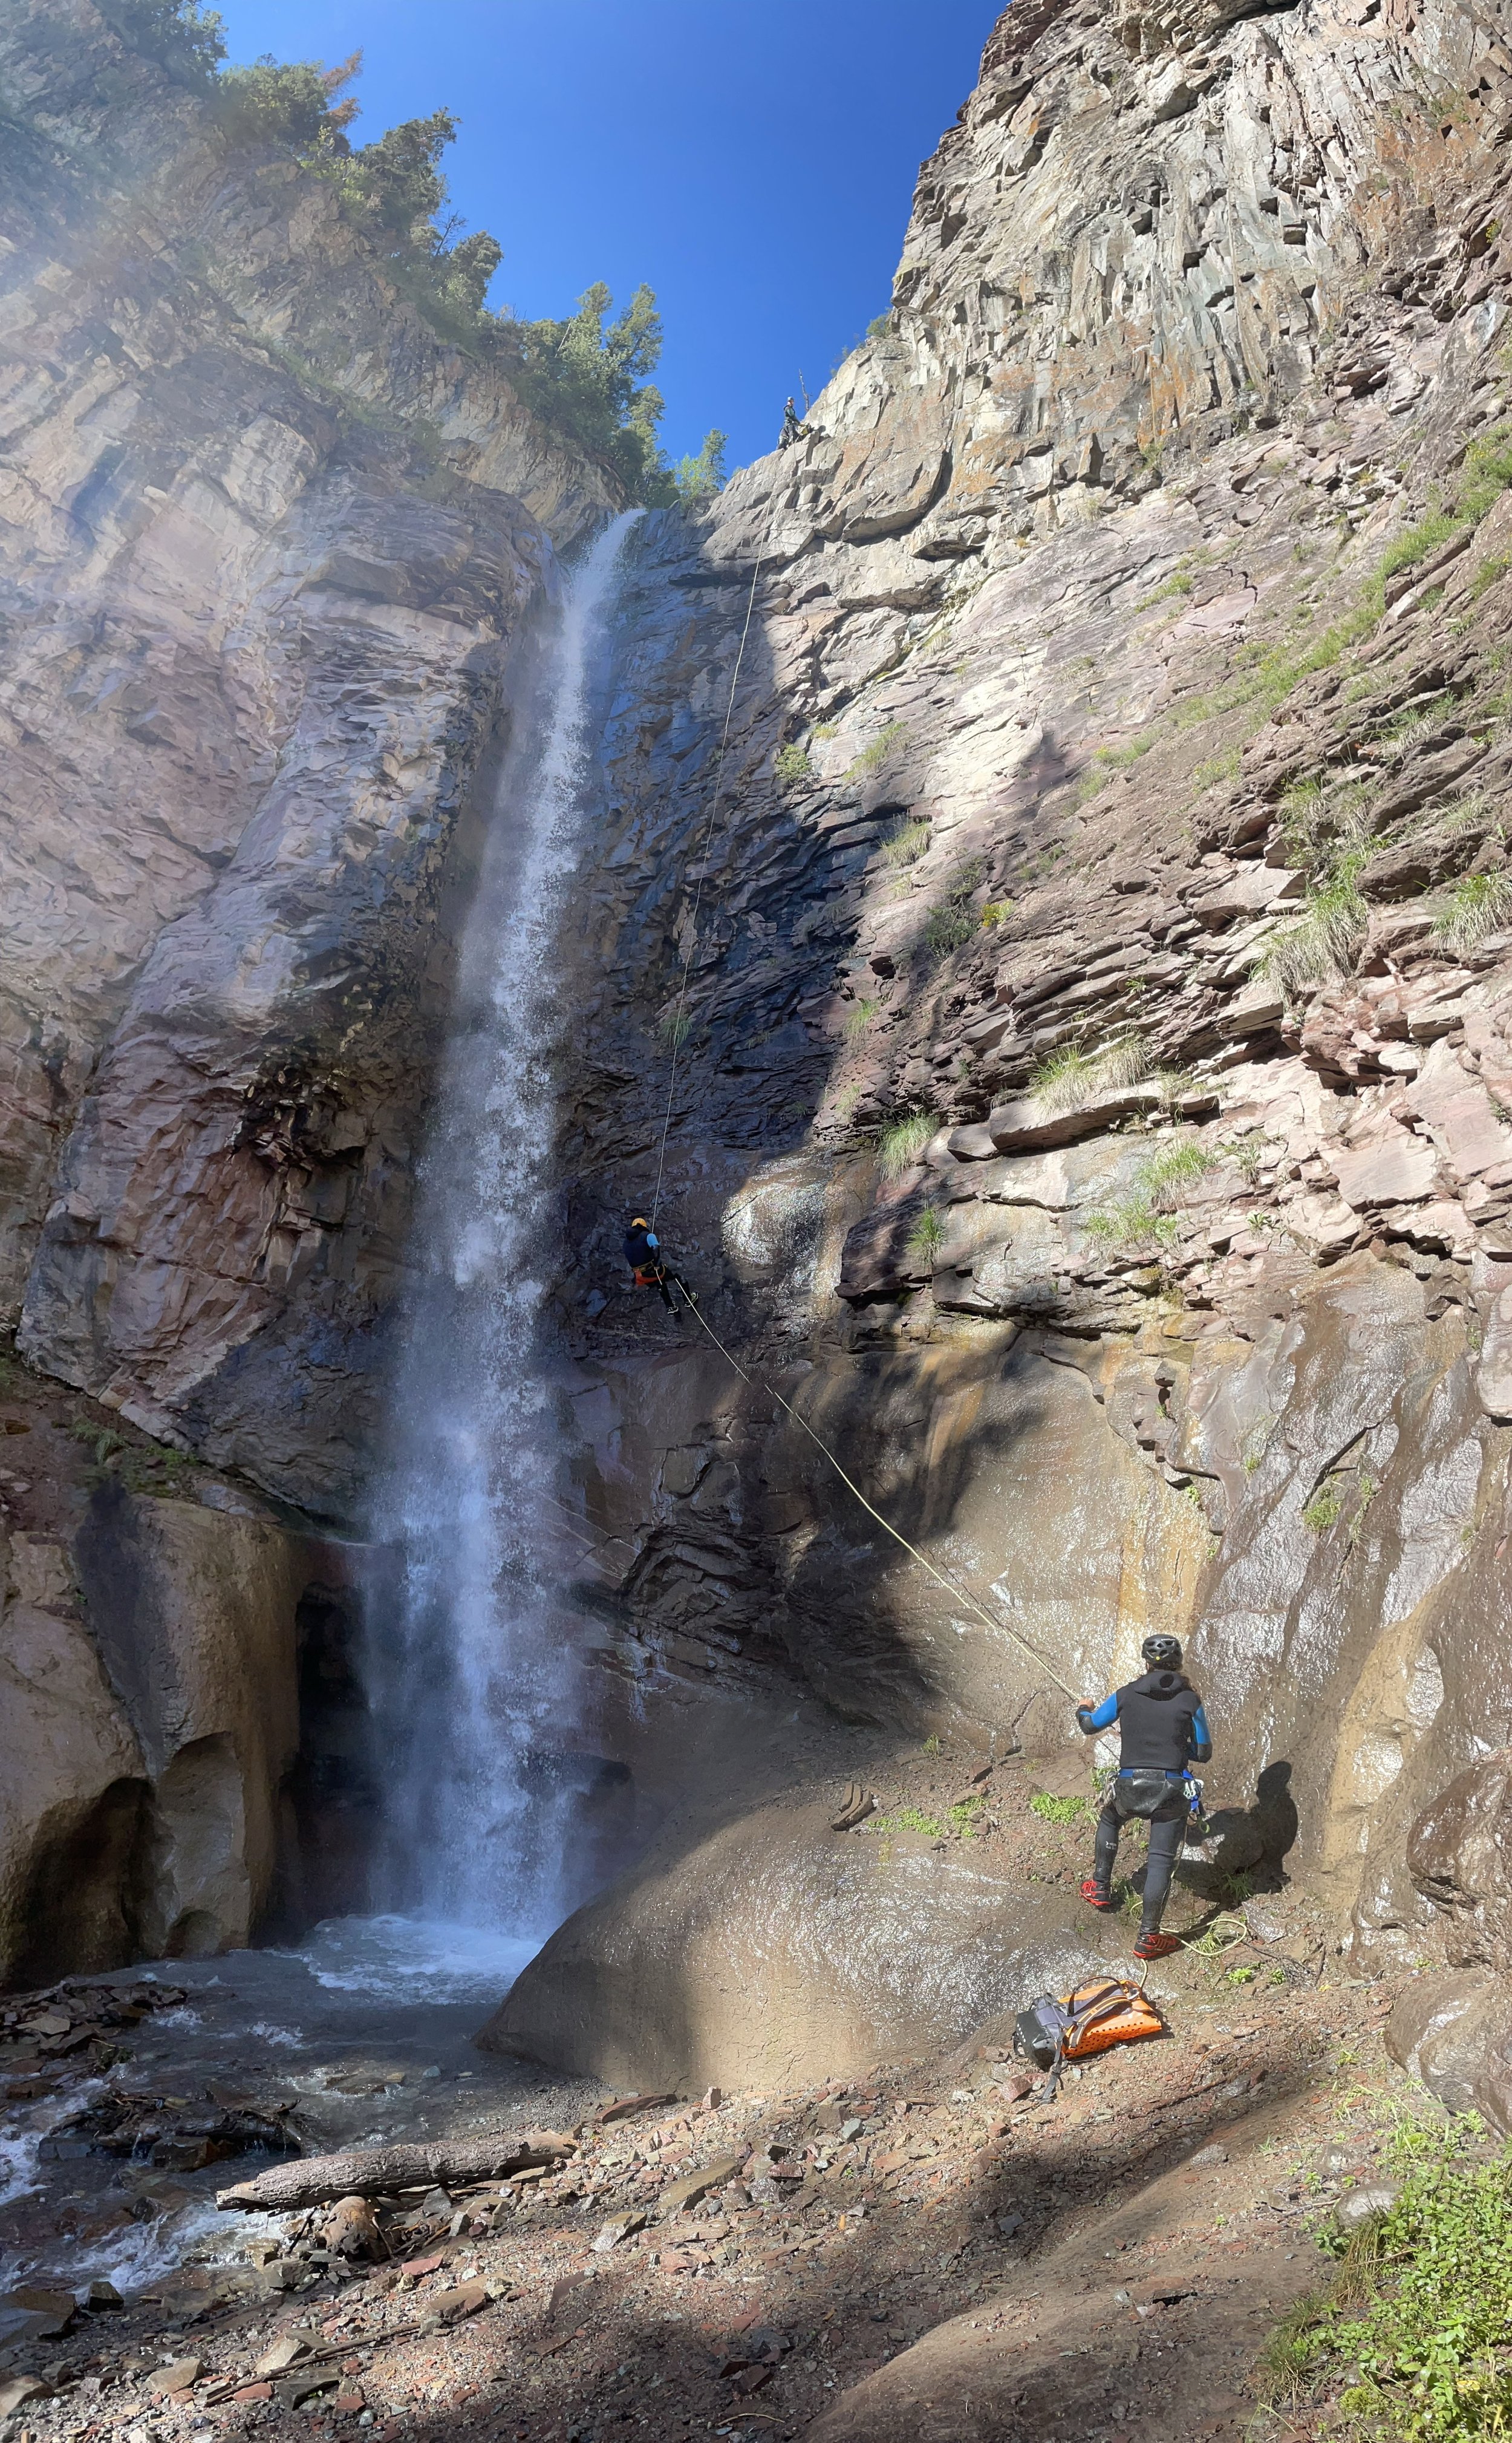 Repelling down 130 foot waterfall